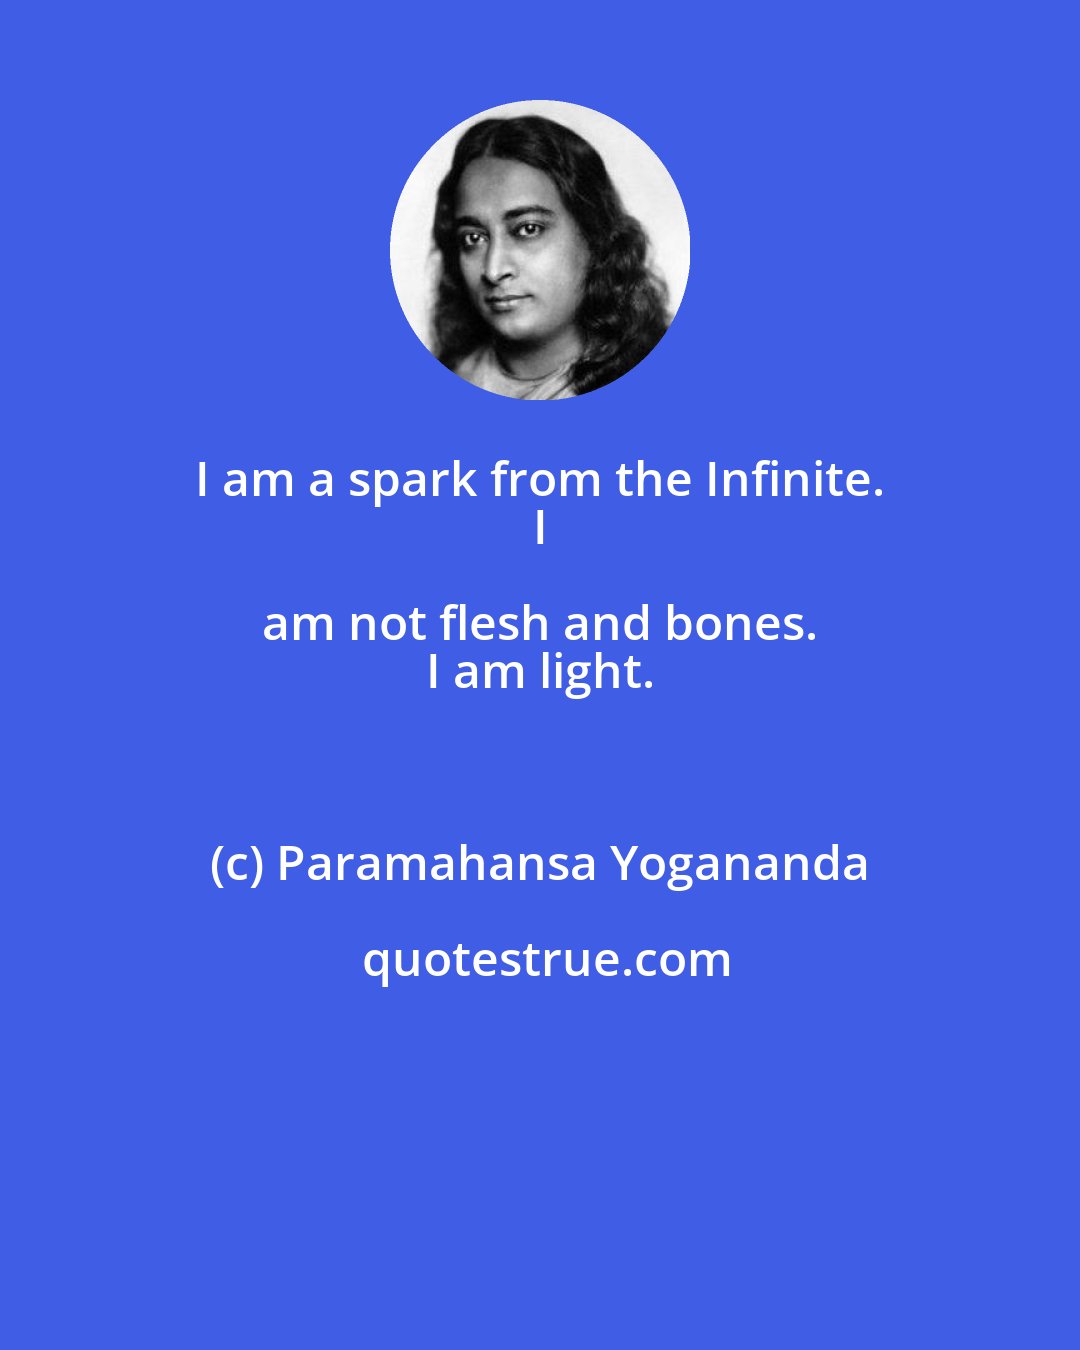 Paramahansa Yogananda: I am a spark from the Infinite. 
 I am not flesh and bones. 
 I am light.